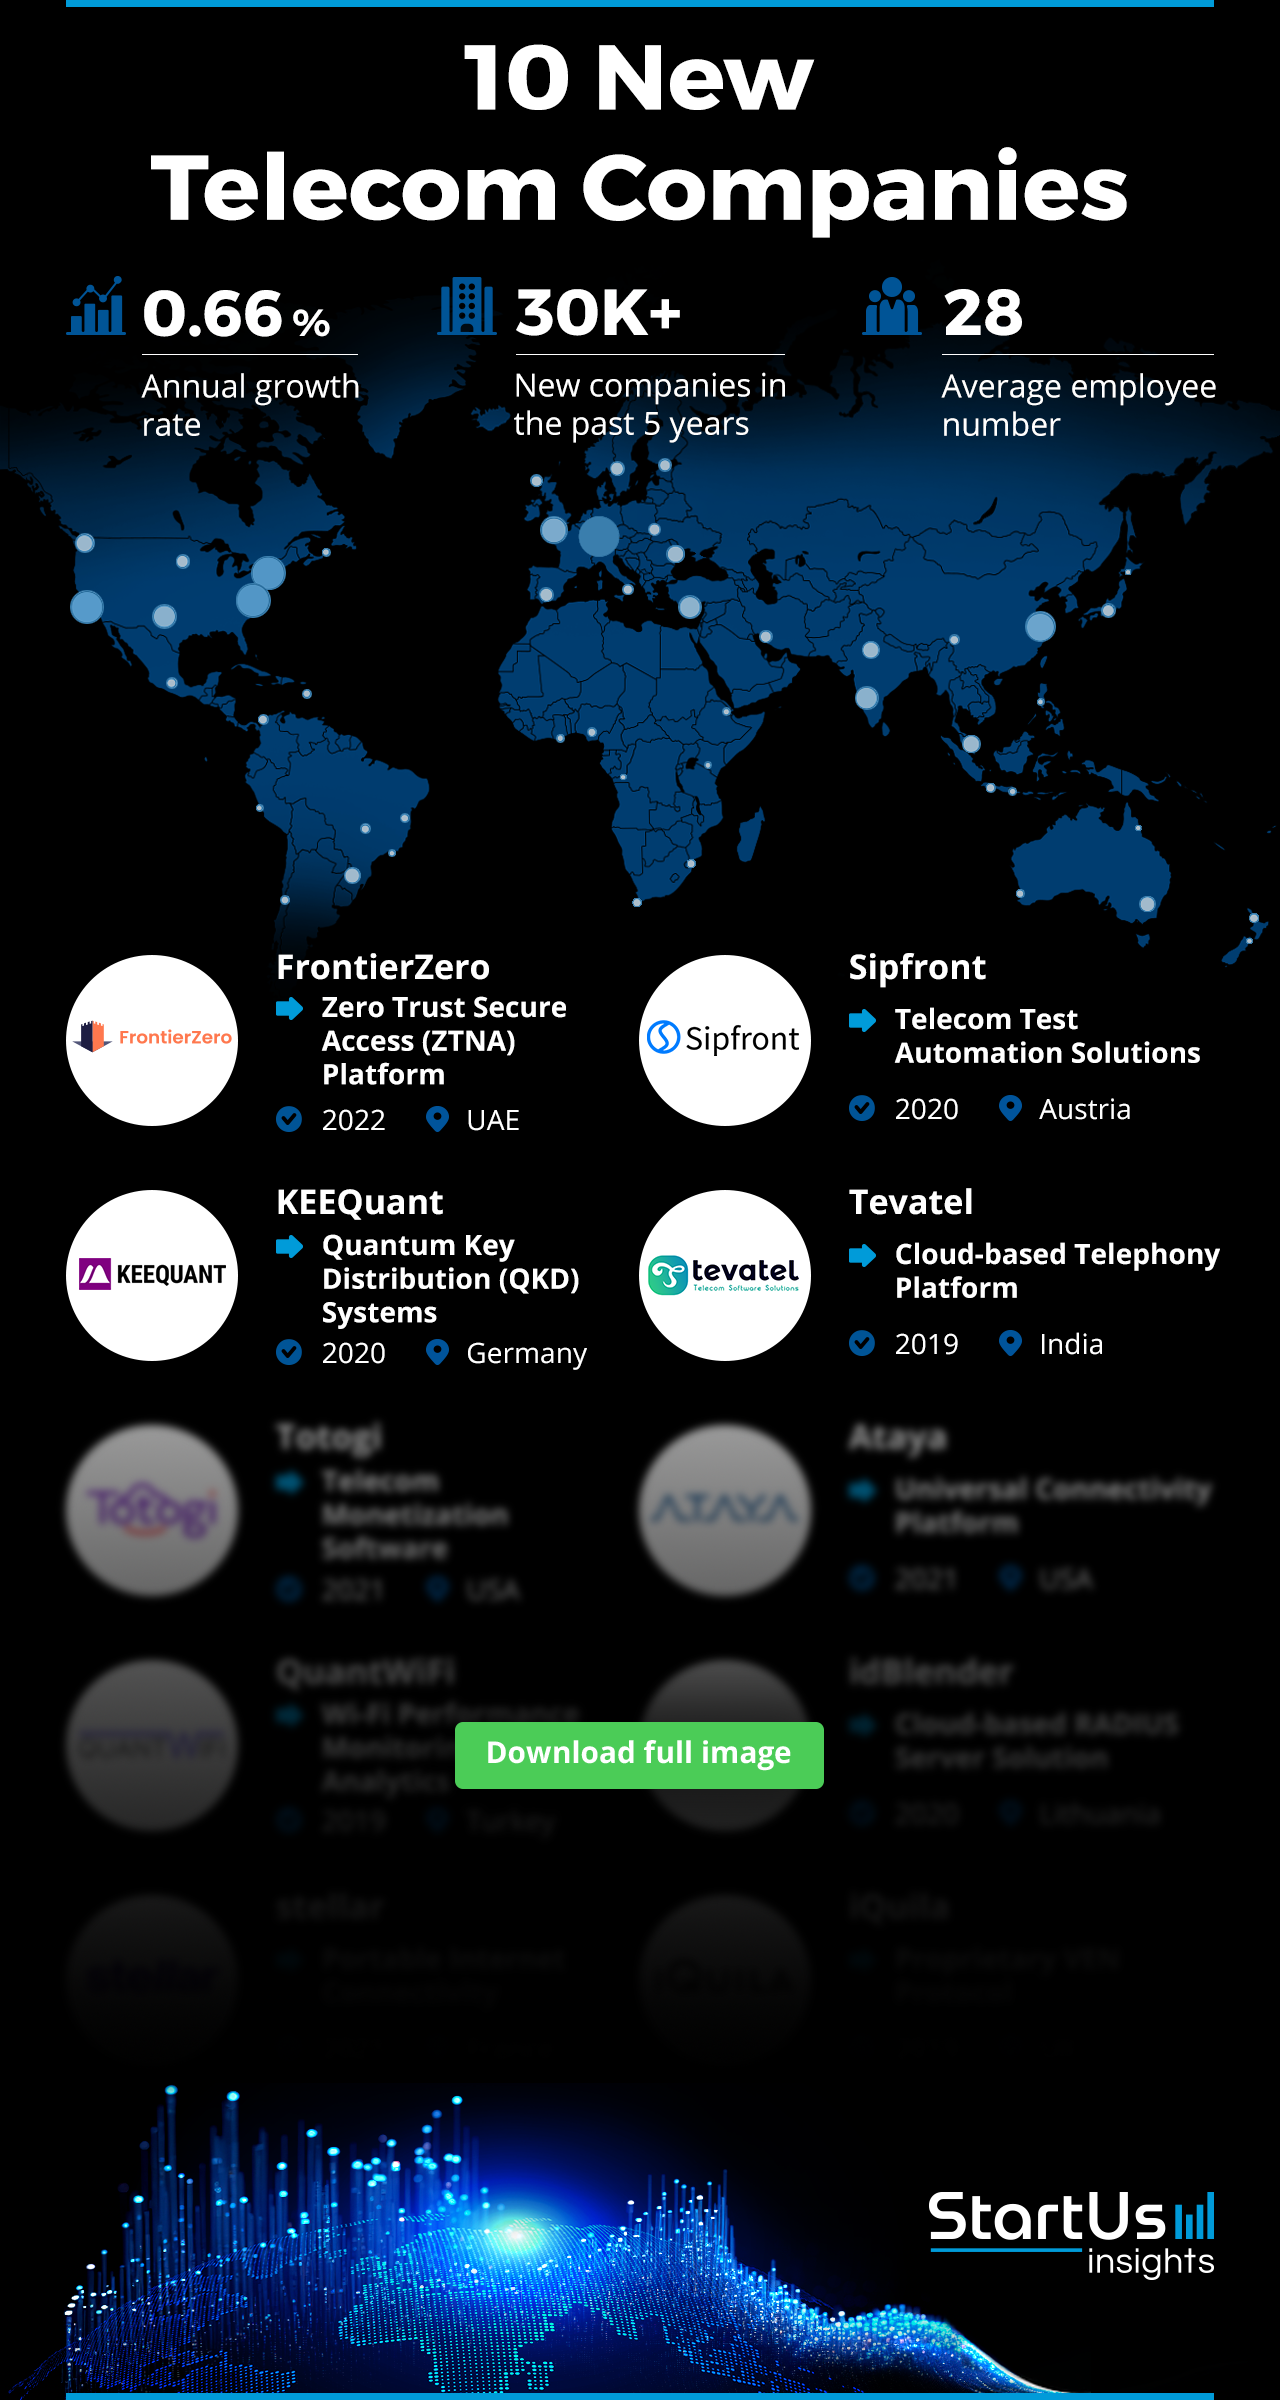 New-Telecom-Companies-Logos-Blurred-StartUs-Insights-noresize